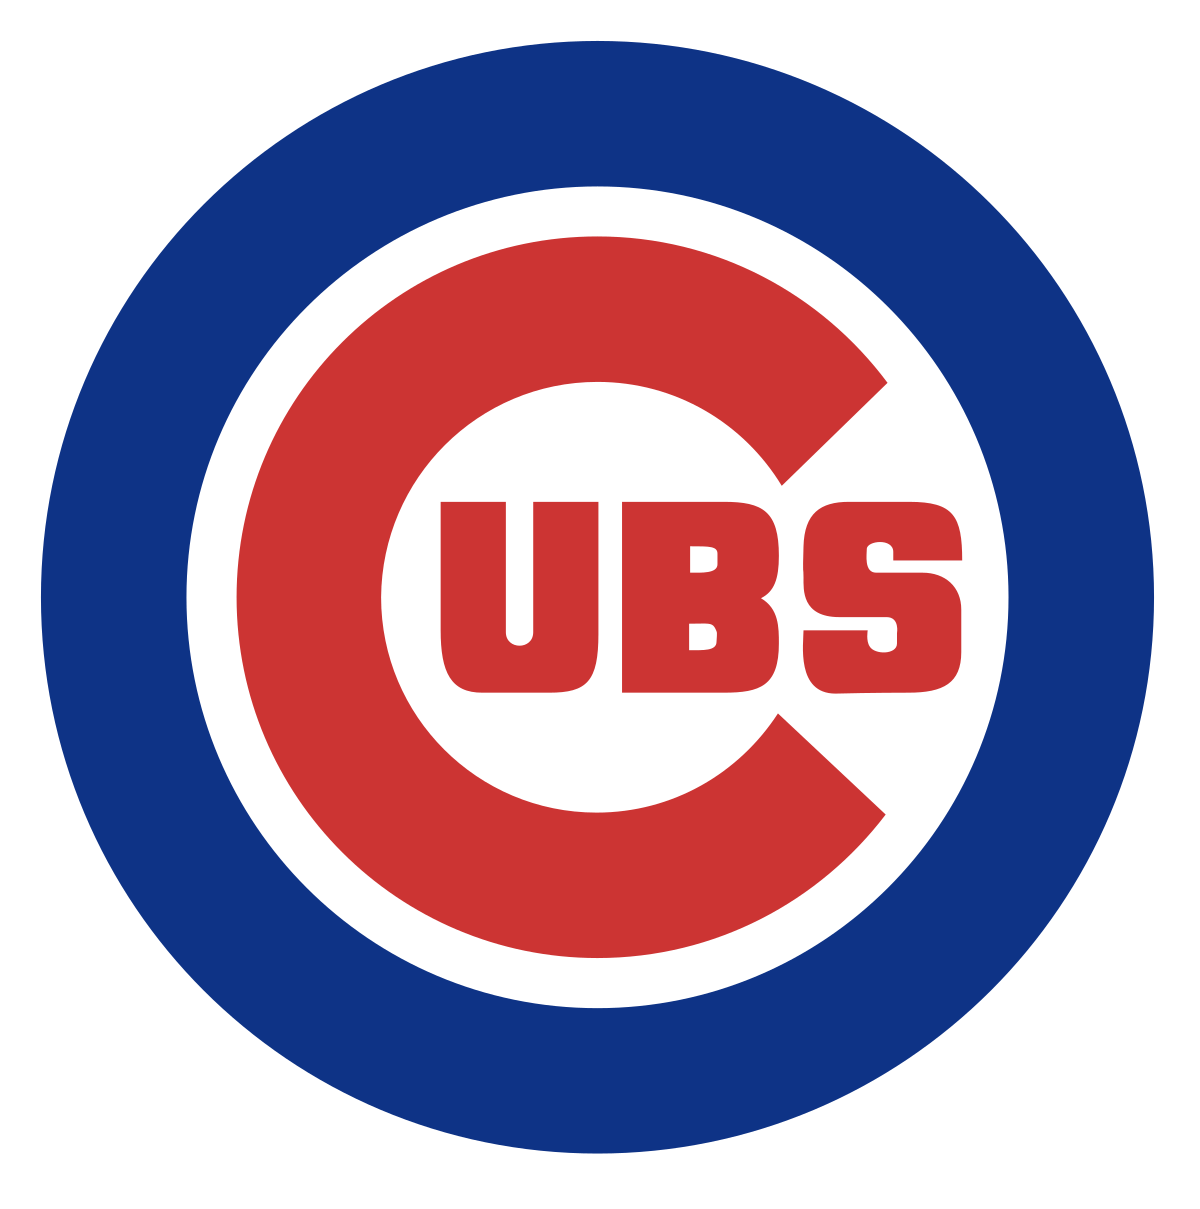 Cubs Old Logo - Chicago Cubs